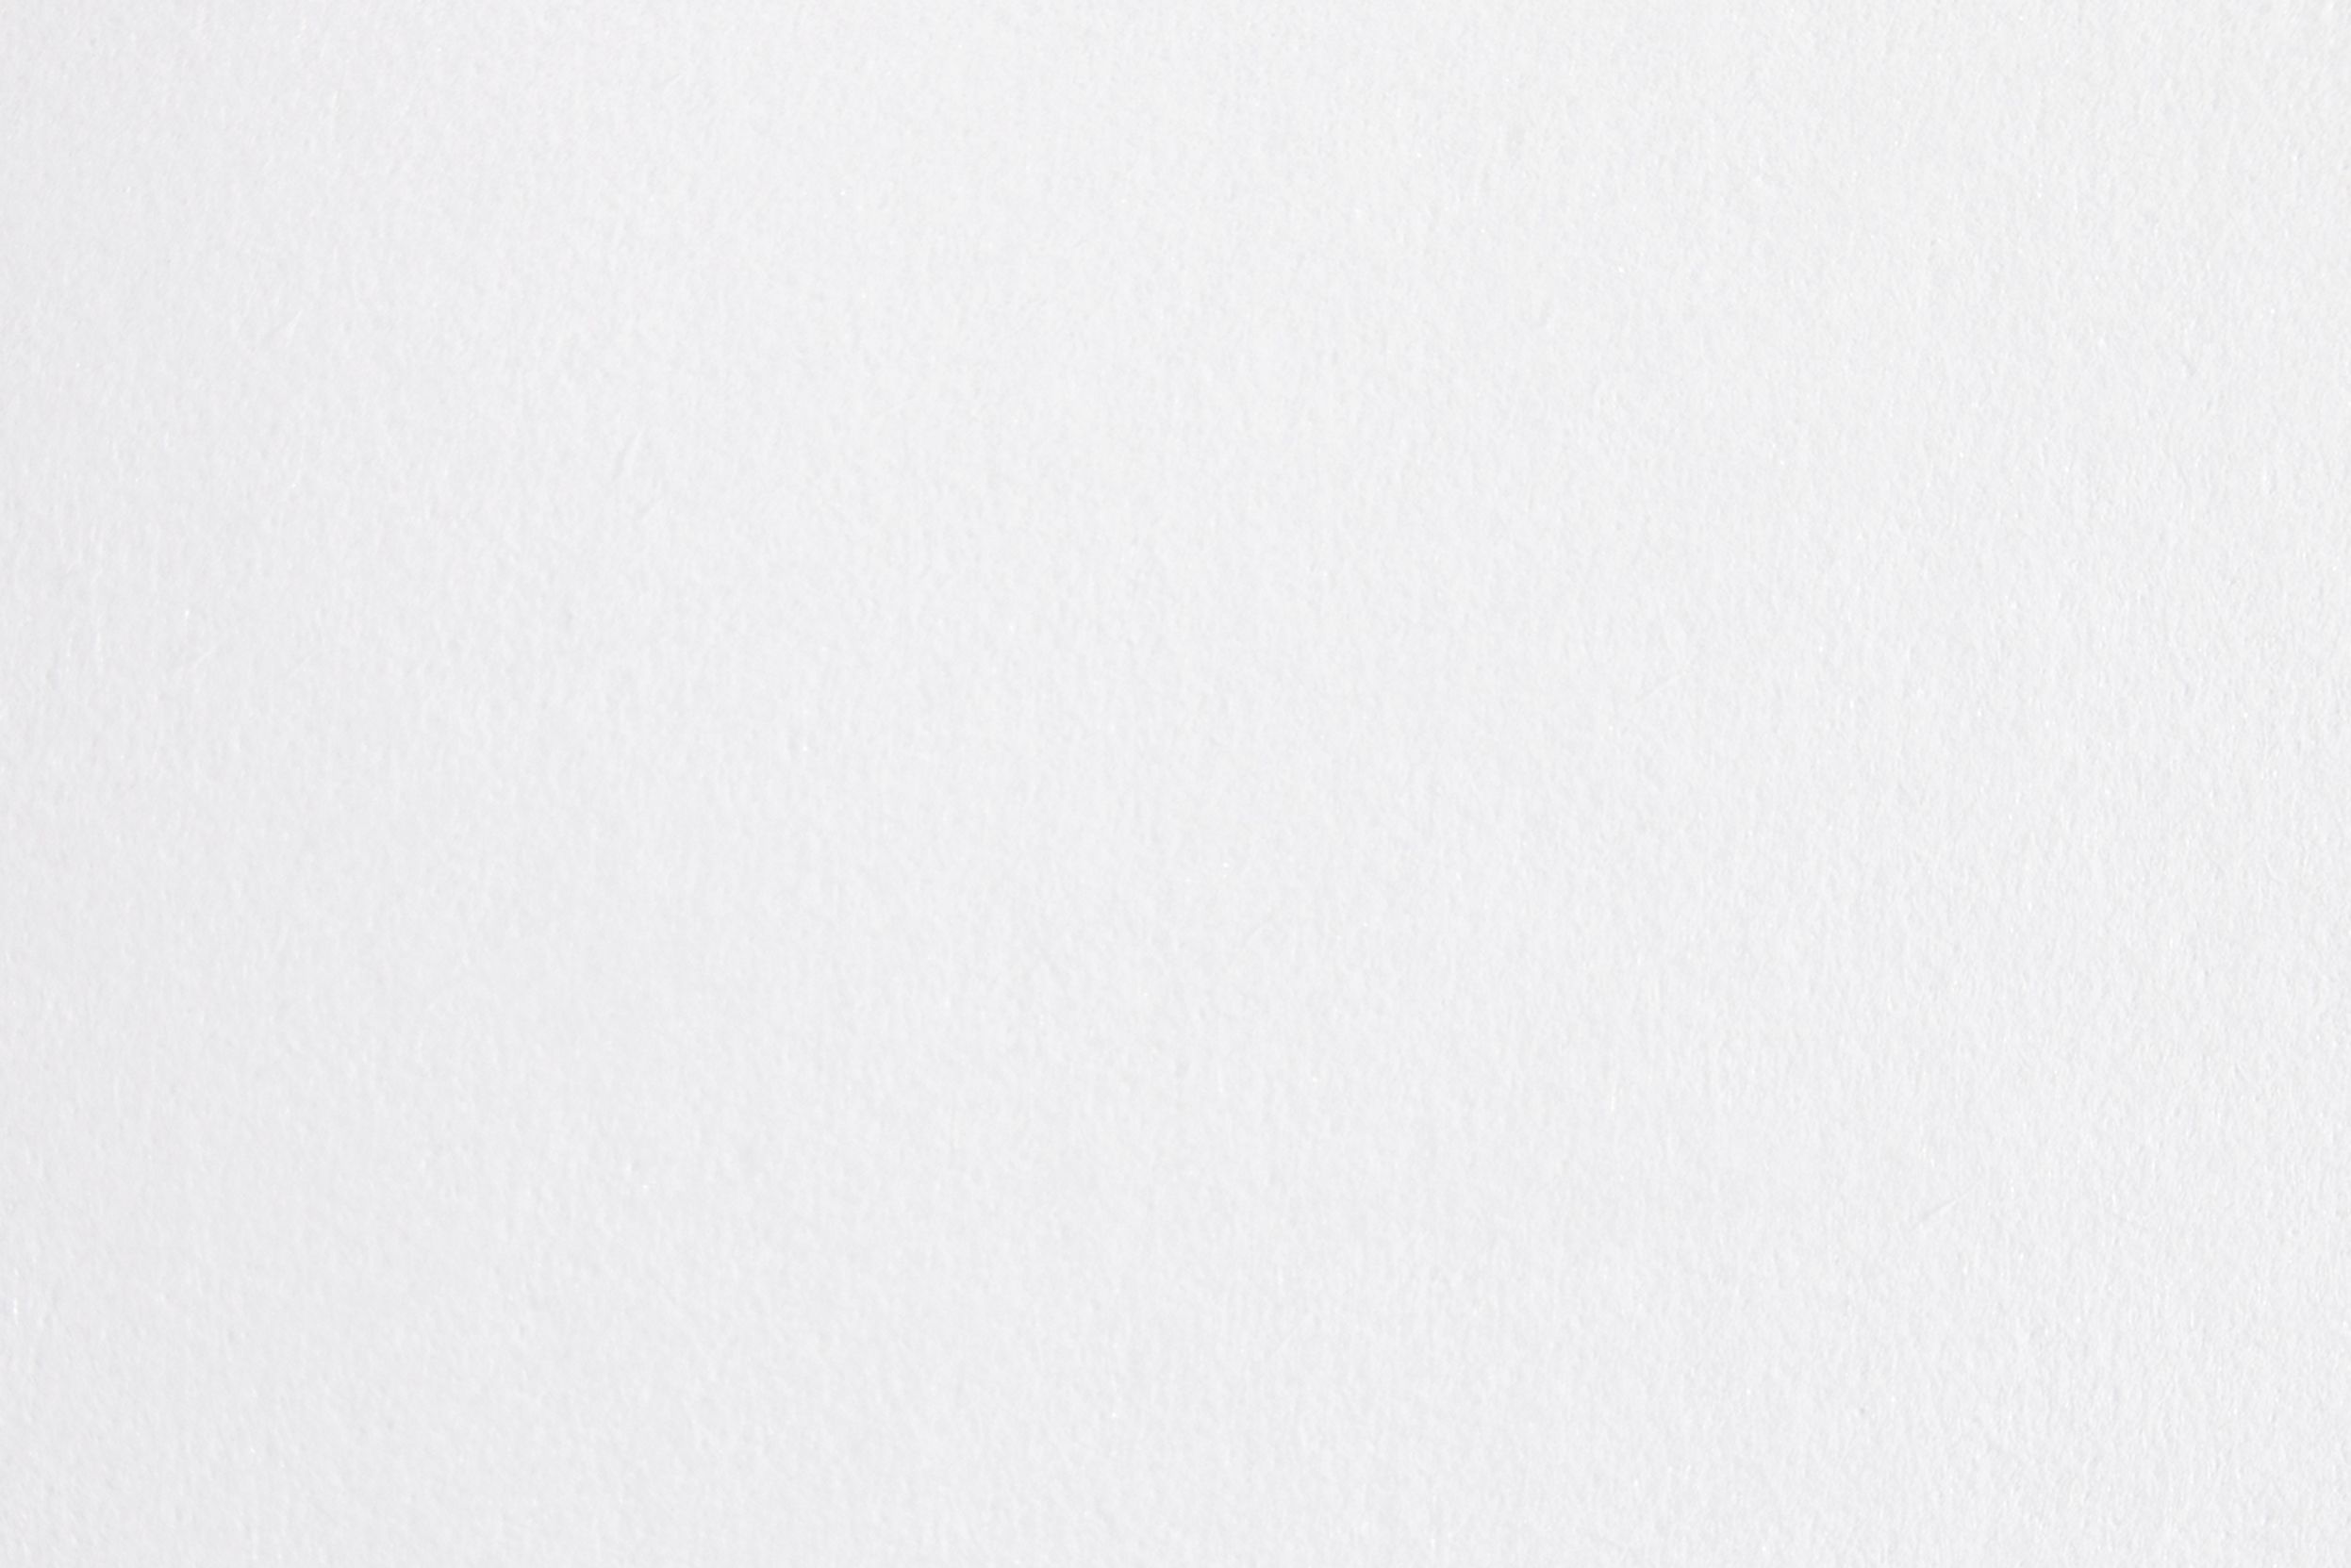 Splendorgel Extra White, no strip, taglio a punta: Carta naturale di pura cellulosa certificata FSC. Superficie liscia e vellutata. Produttore: Fedrigoni